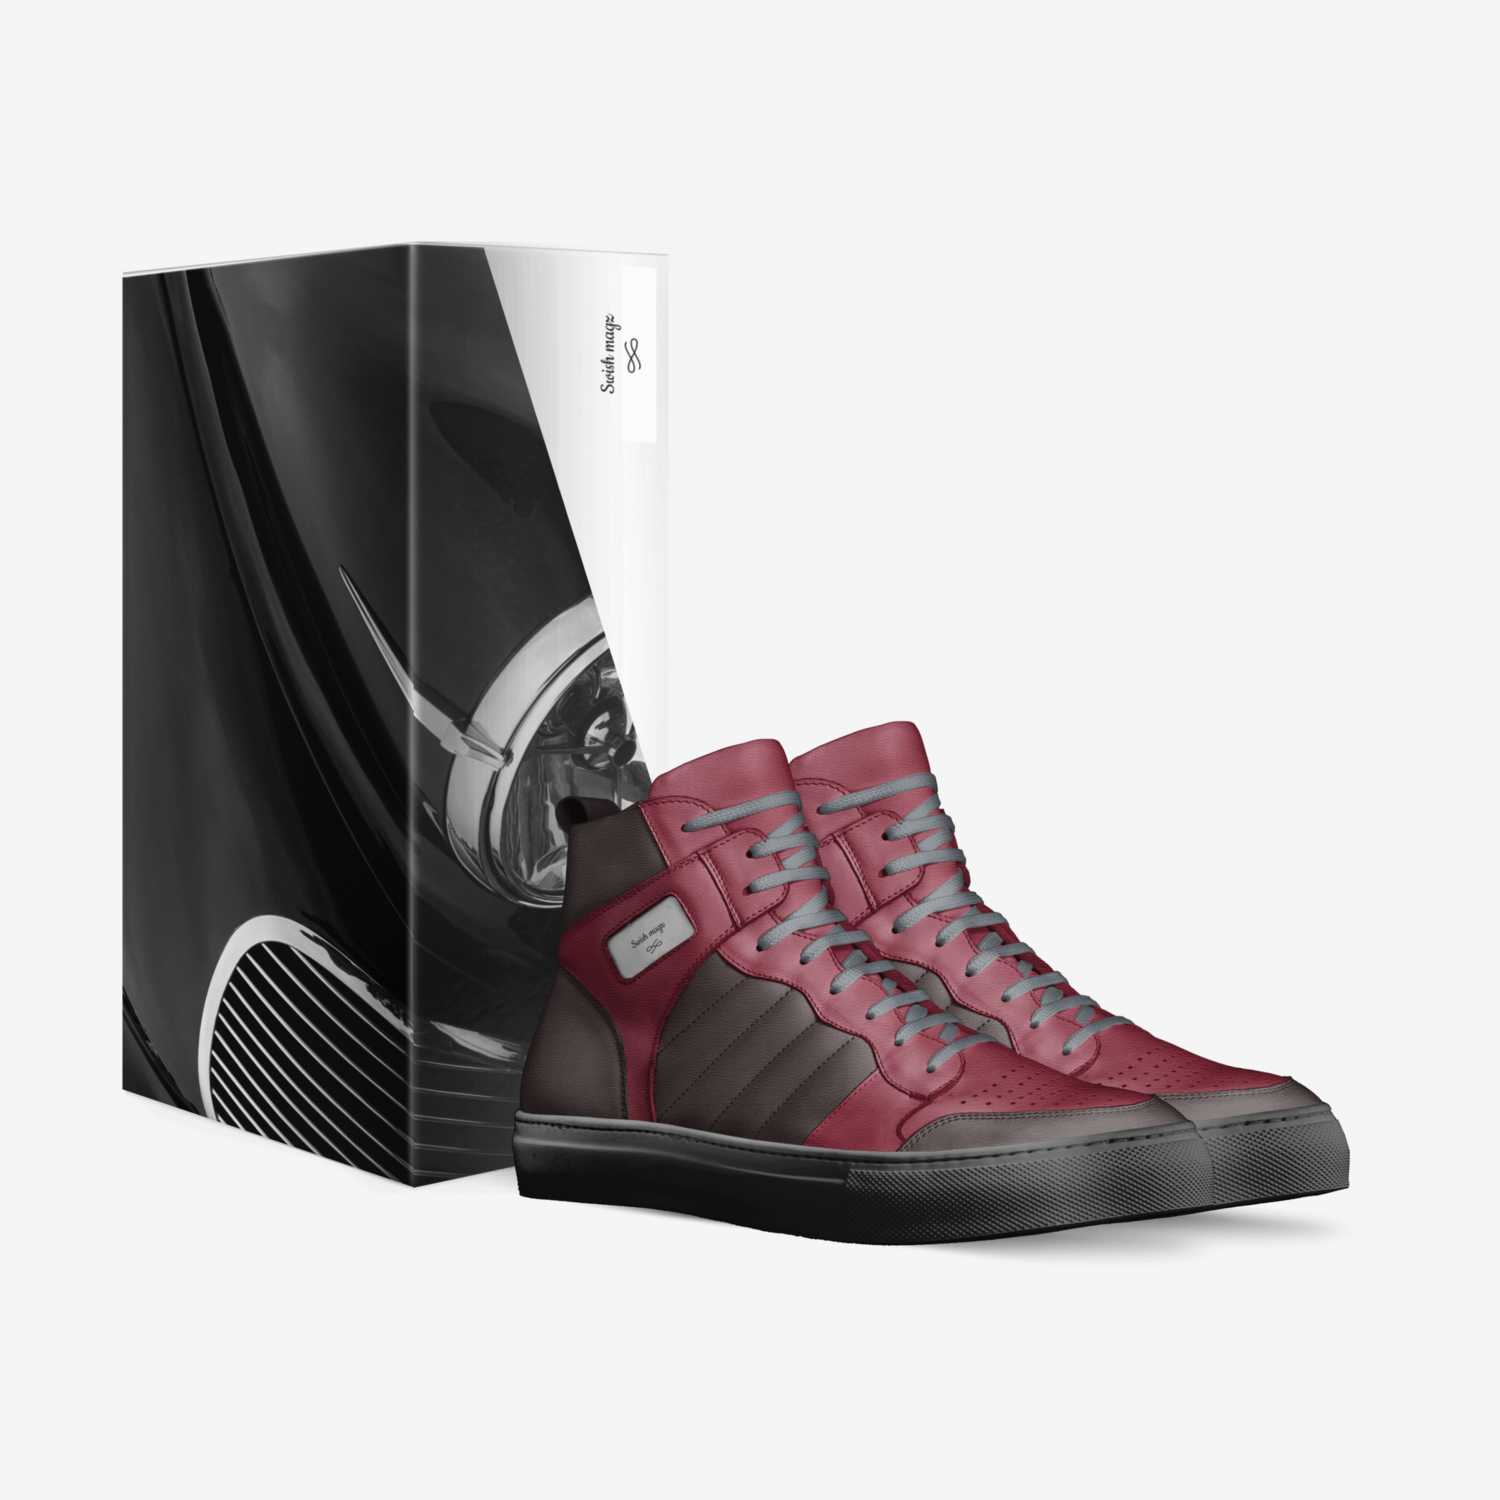 Swish magz custom made in Italy shoes by Jean-eric Kambanda | Box view